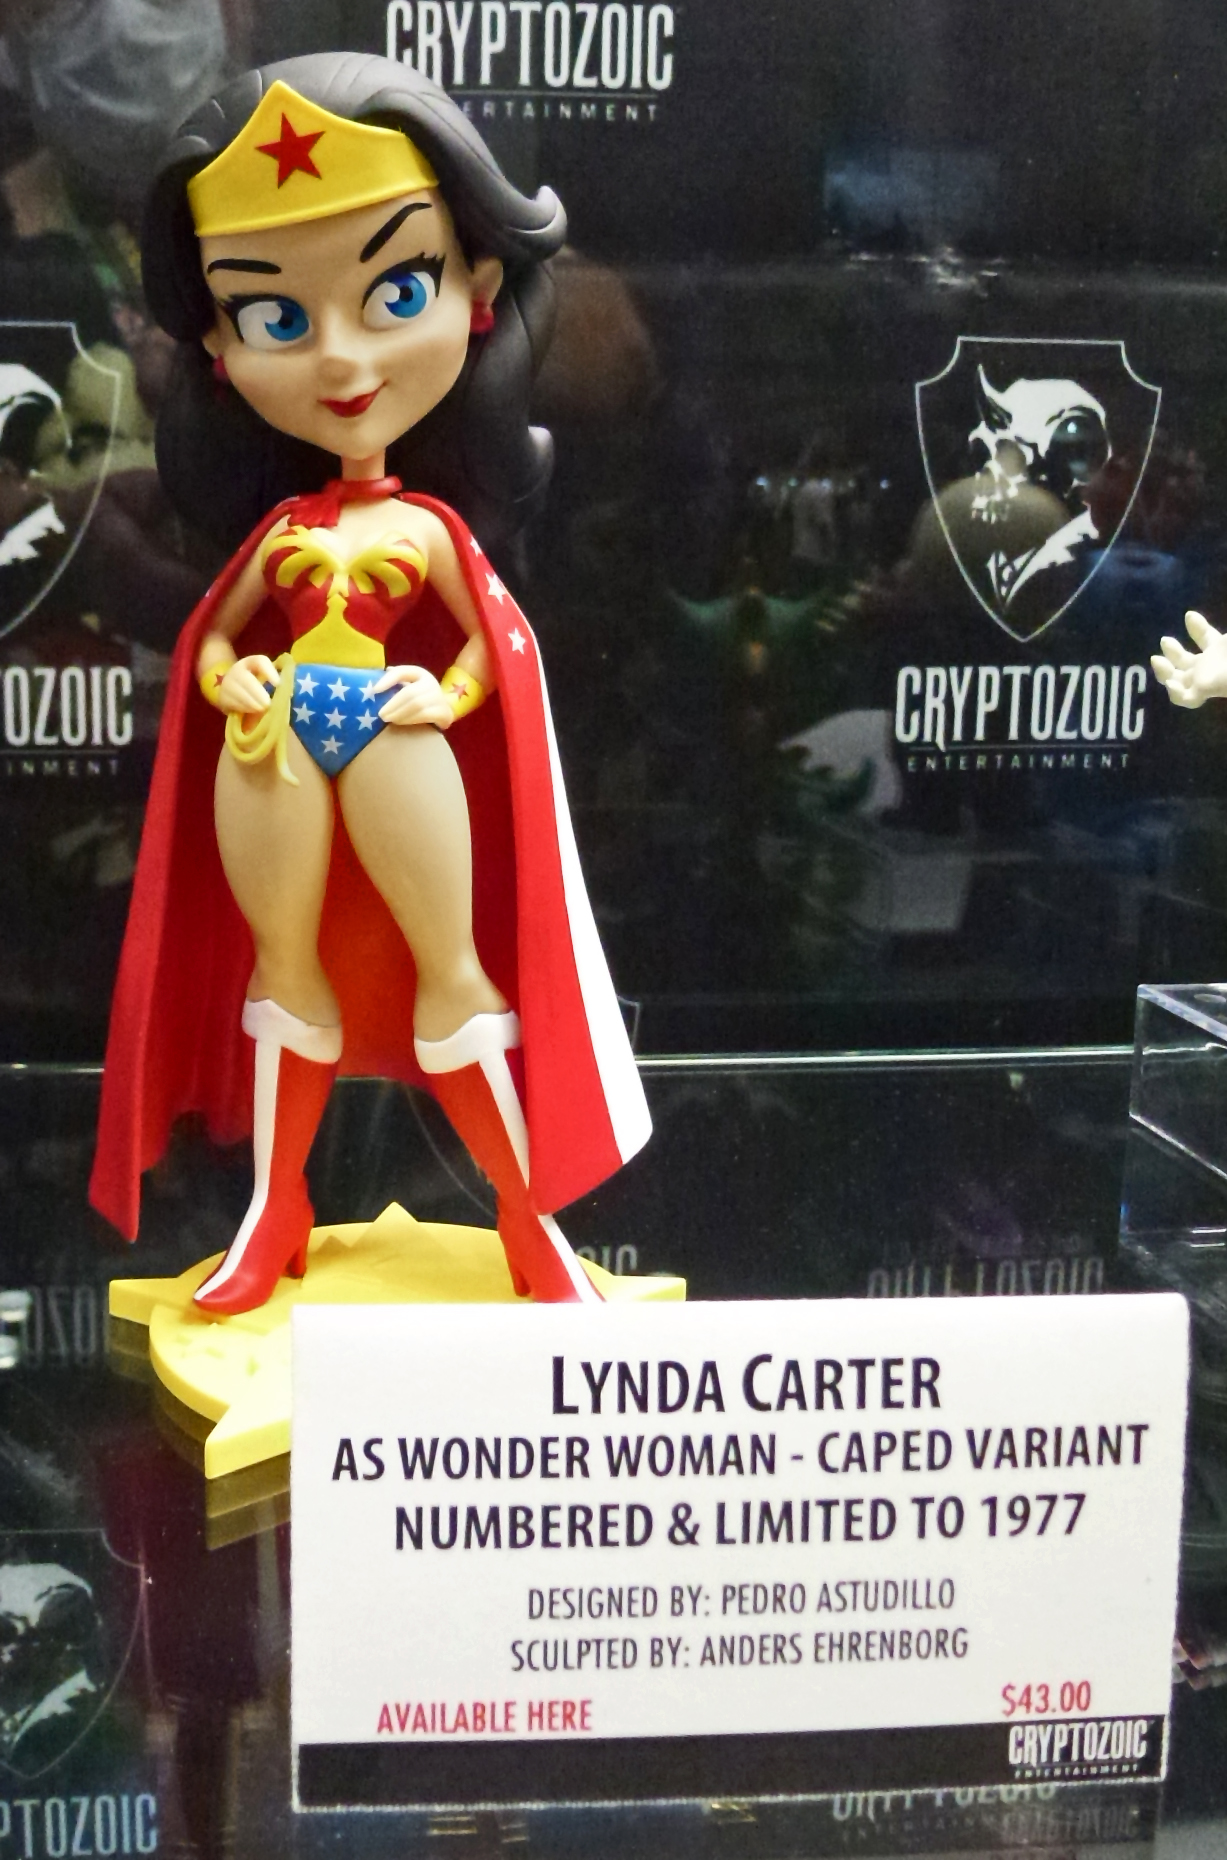 Cute Cryptozoic Lynda Carter Wonder Woman Figurine.jpg